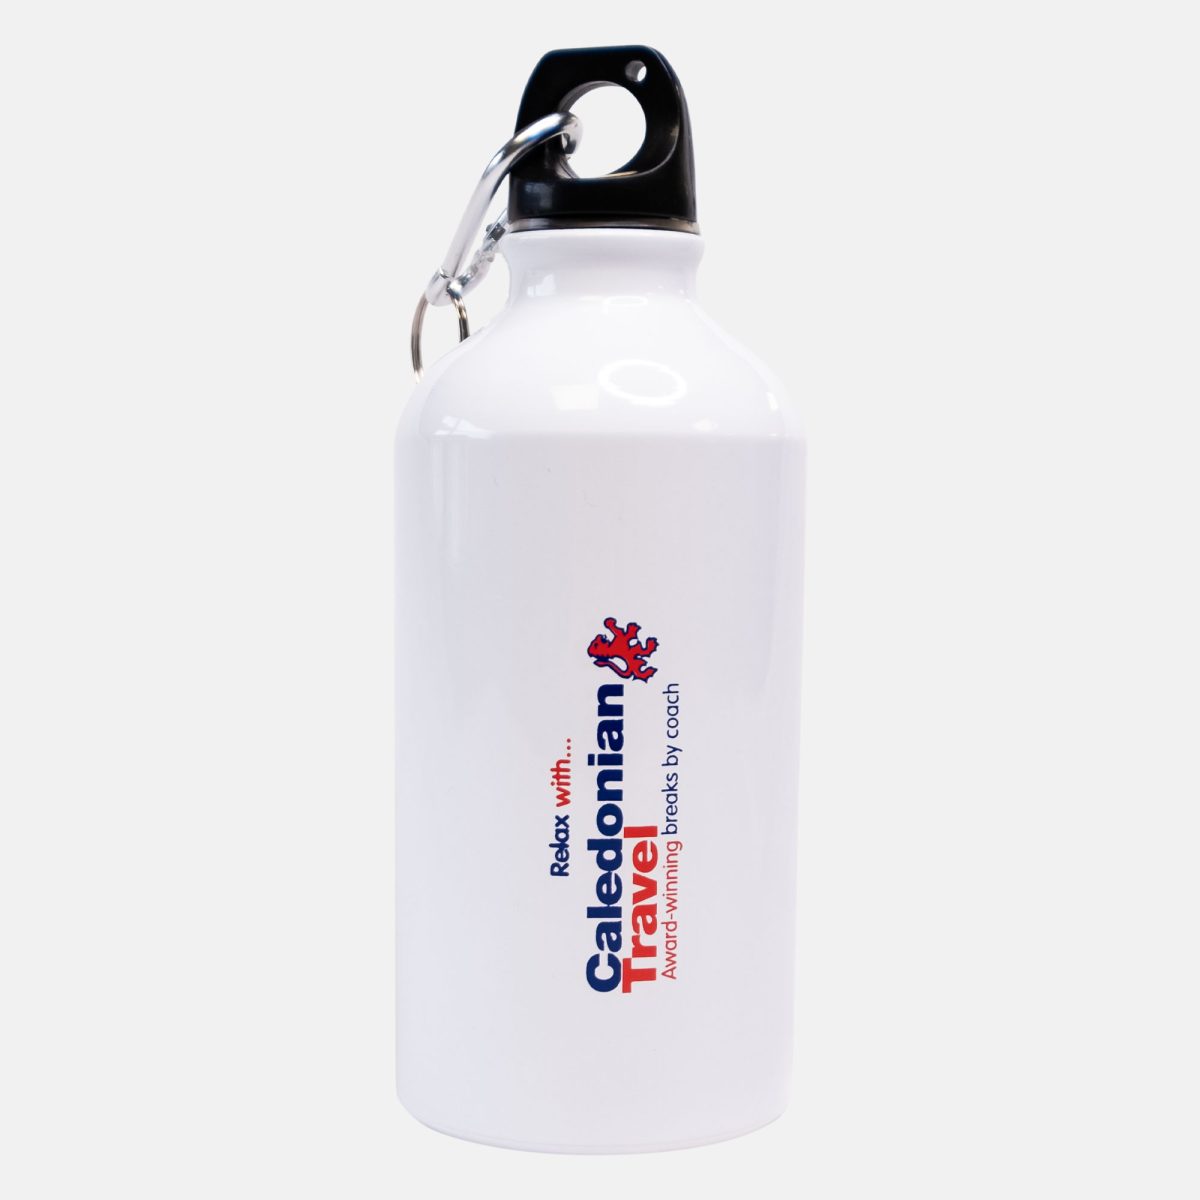 caledonian travel metal carabiner water bottle